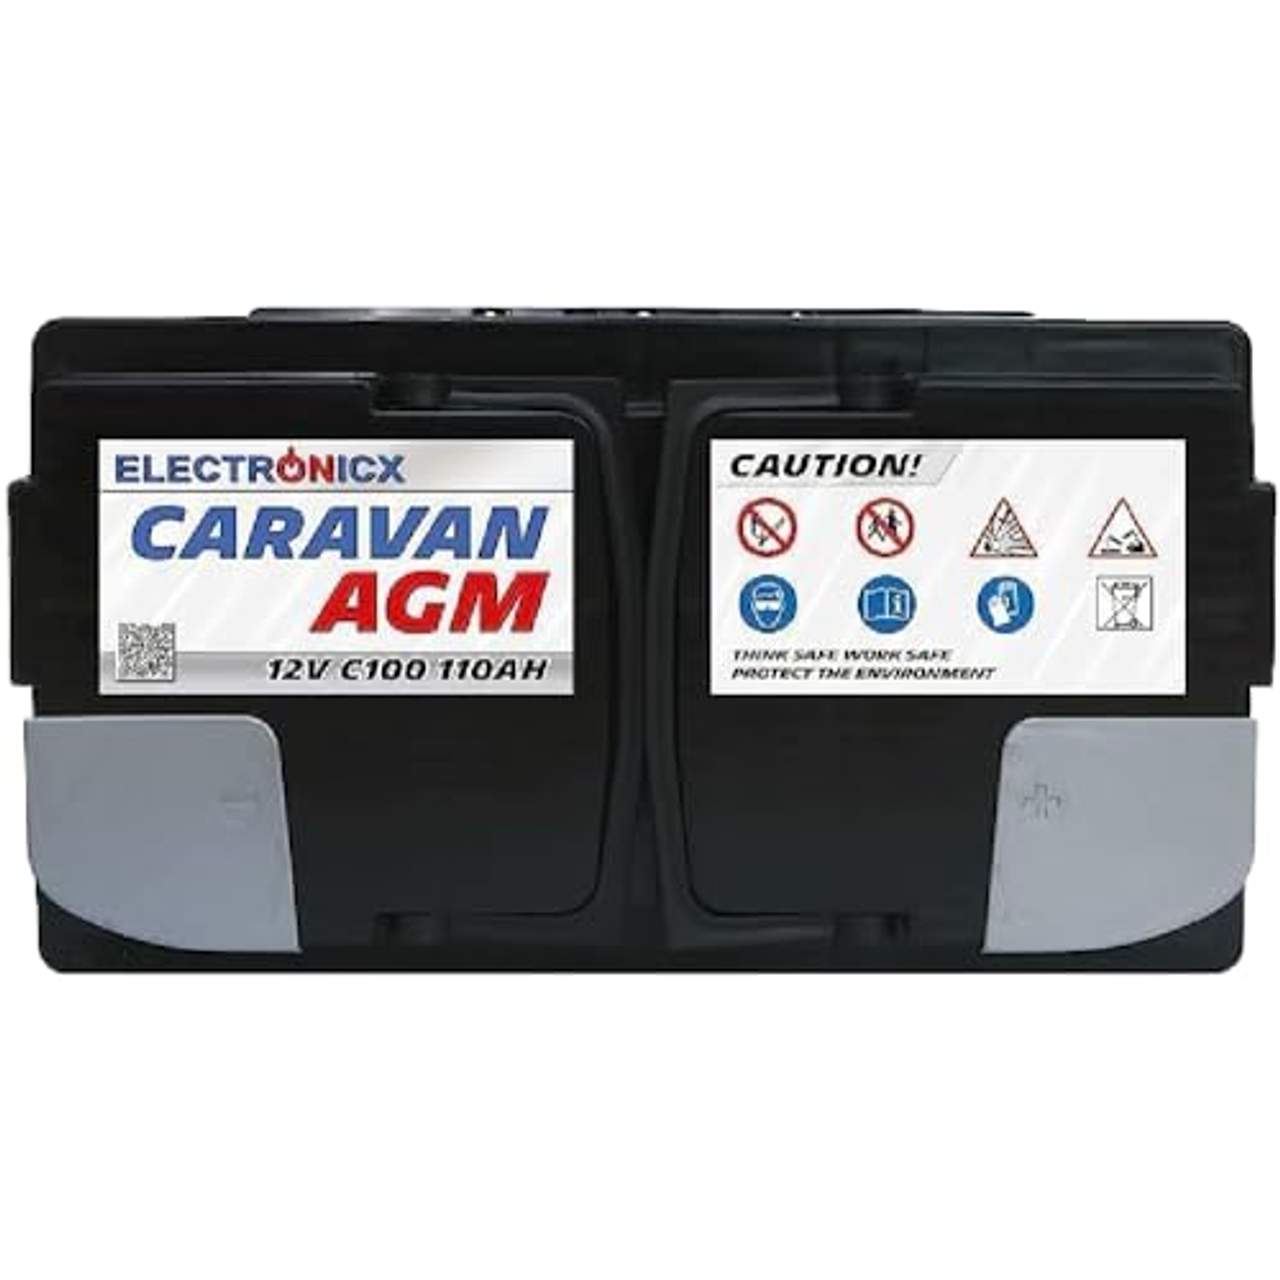 AGM Batterie 12v 110Ah Electronicx Caravan Edition V2 Solarbatterie 12v Akku 12v Solar